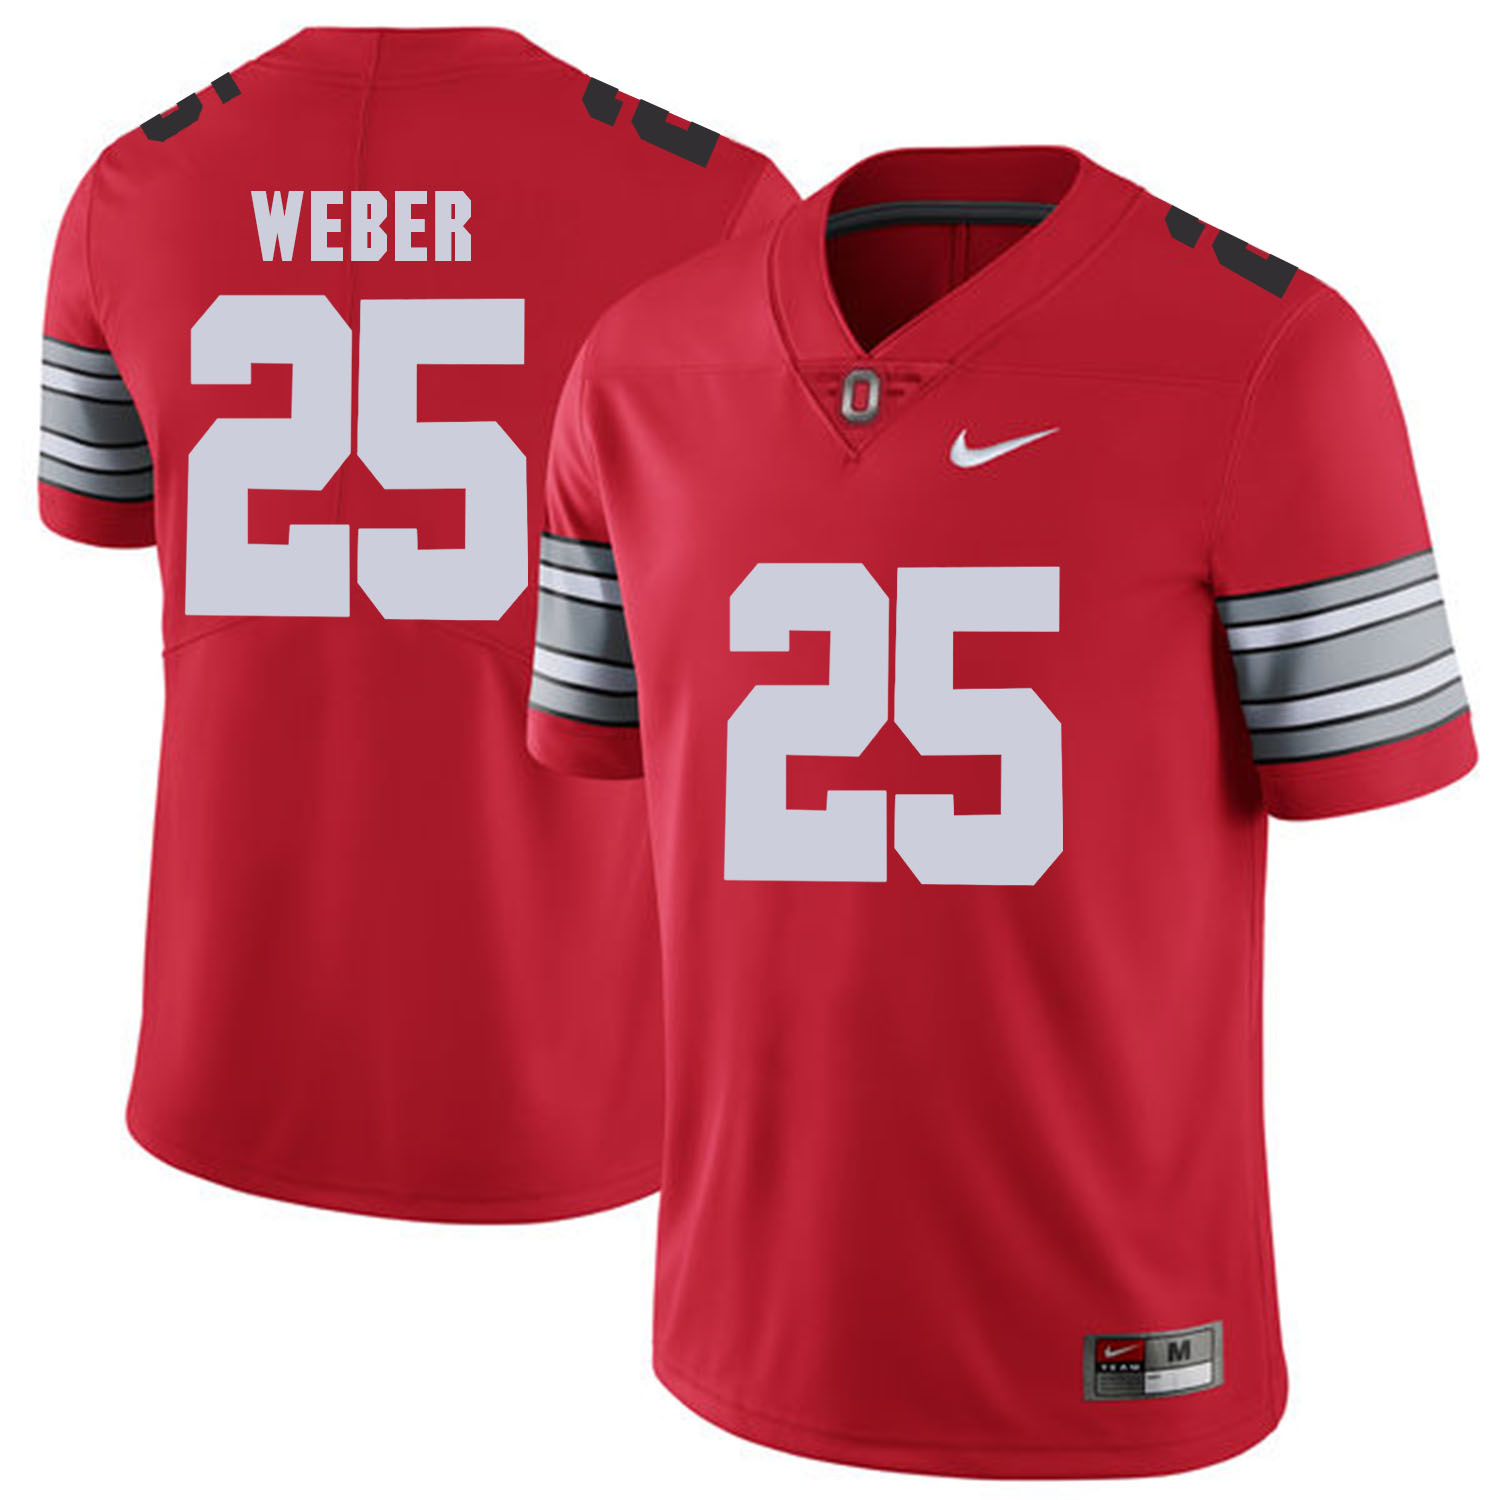 Men Ohio State 25 Weber Red Customized NCAA Jerseys